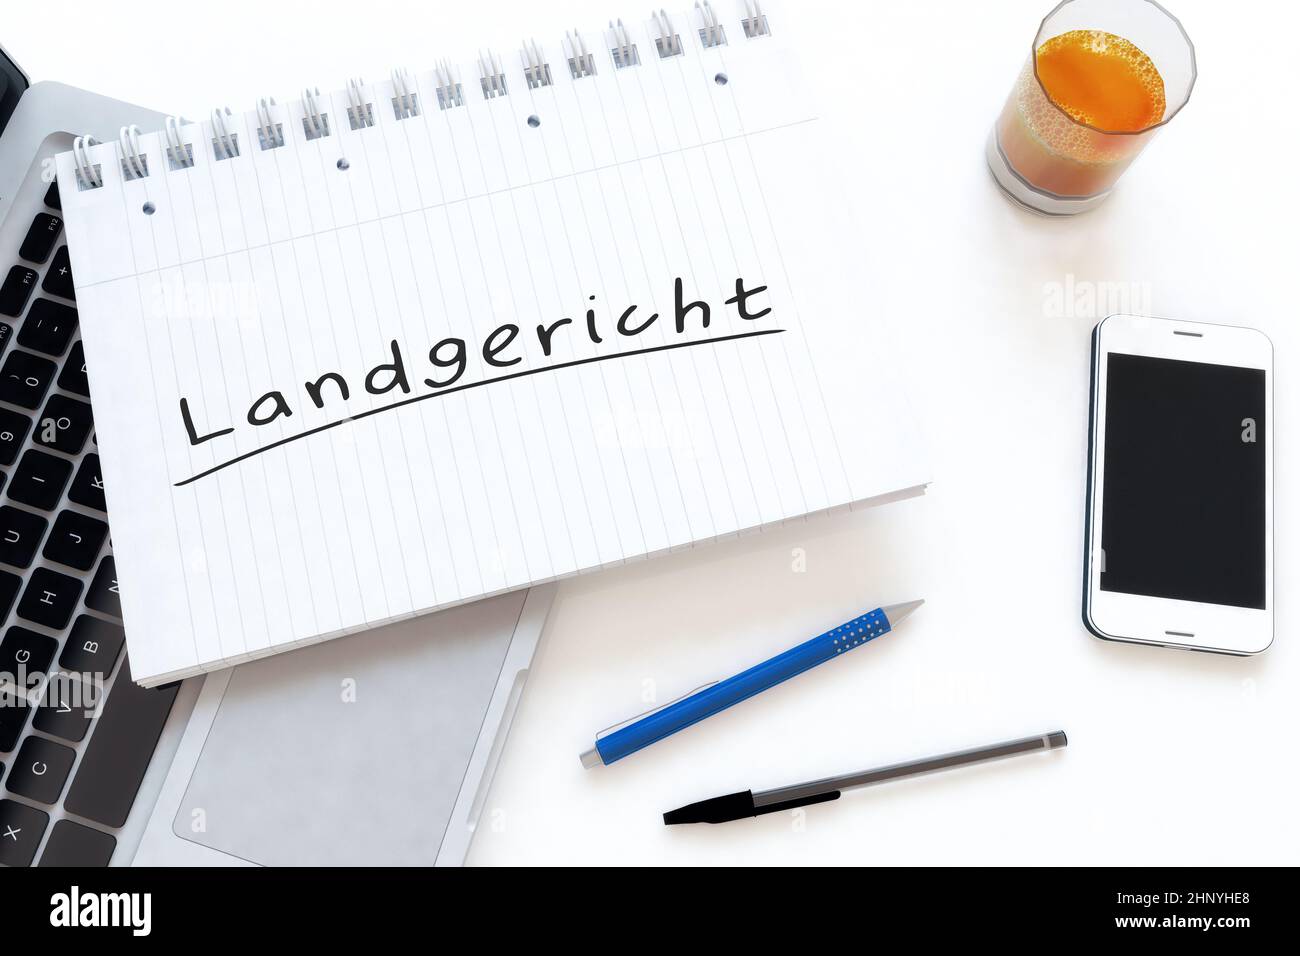 Landgericht - german word for district court - handwritten text in a notebook on a desk - 3d render illustration. Stock Photo